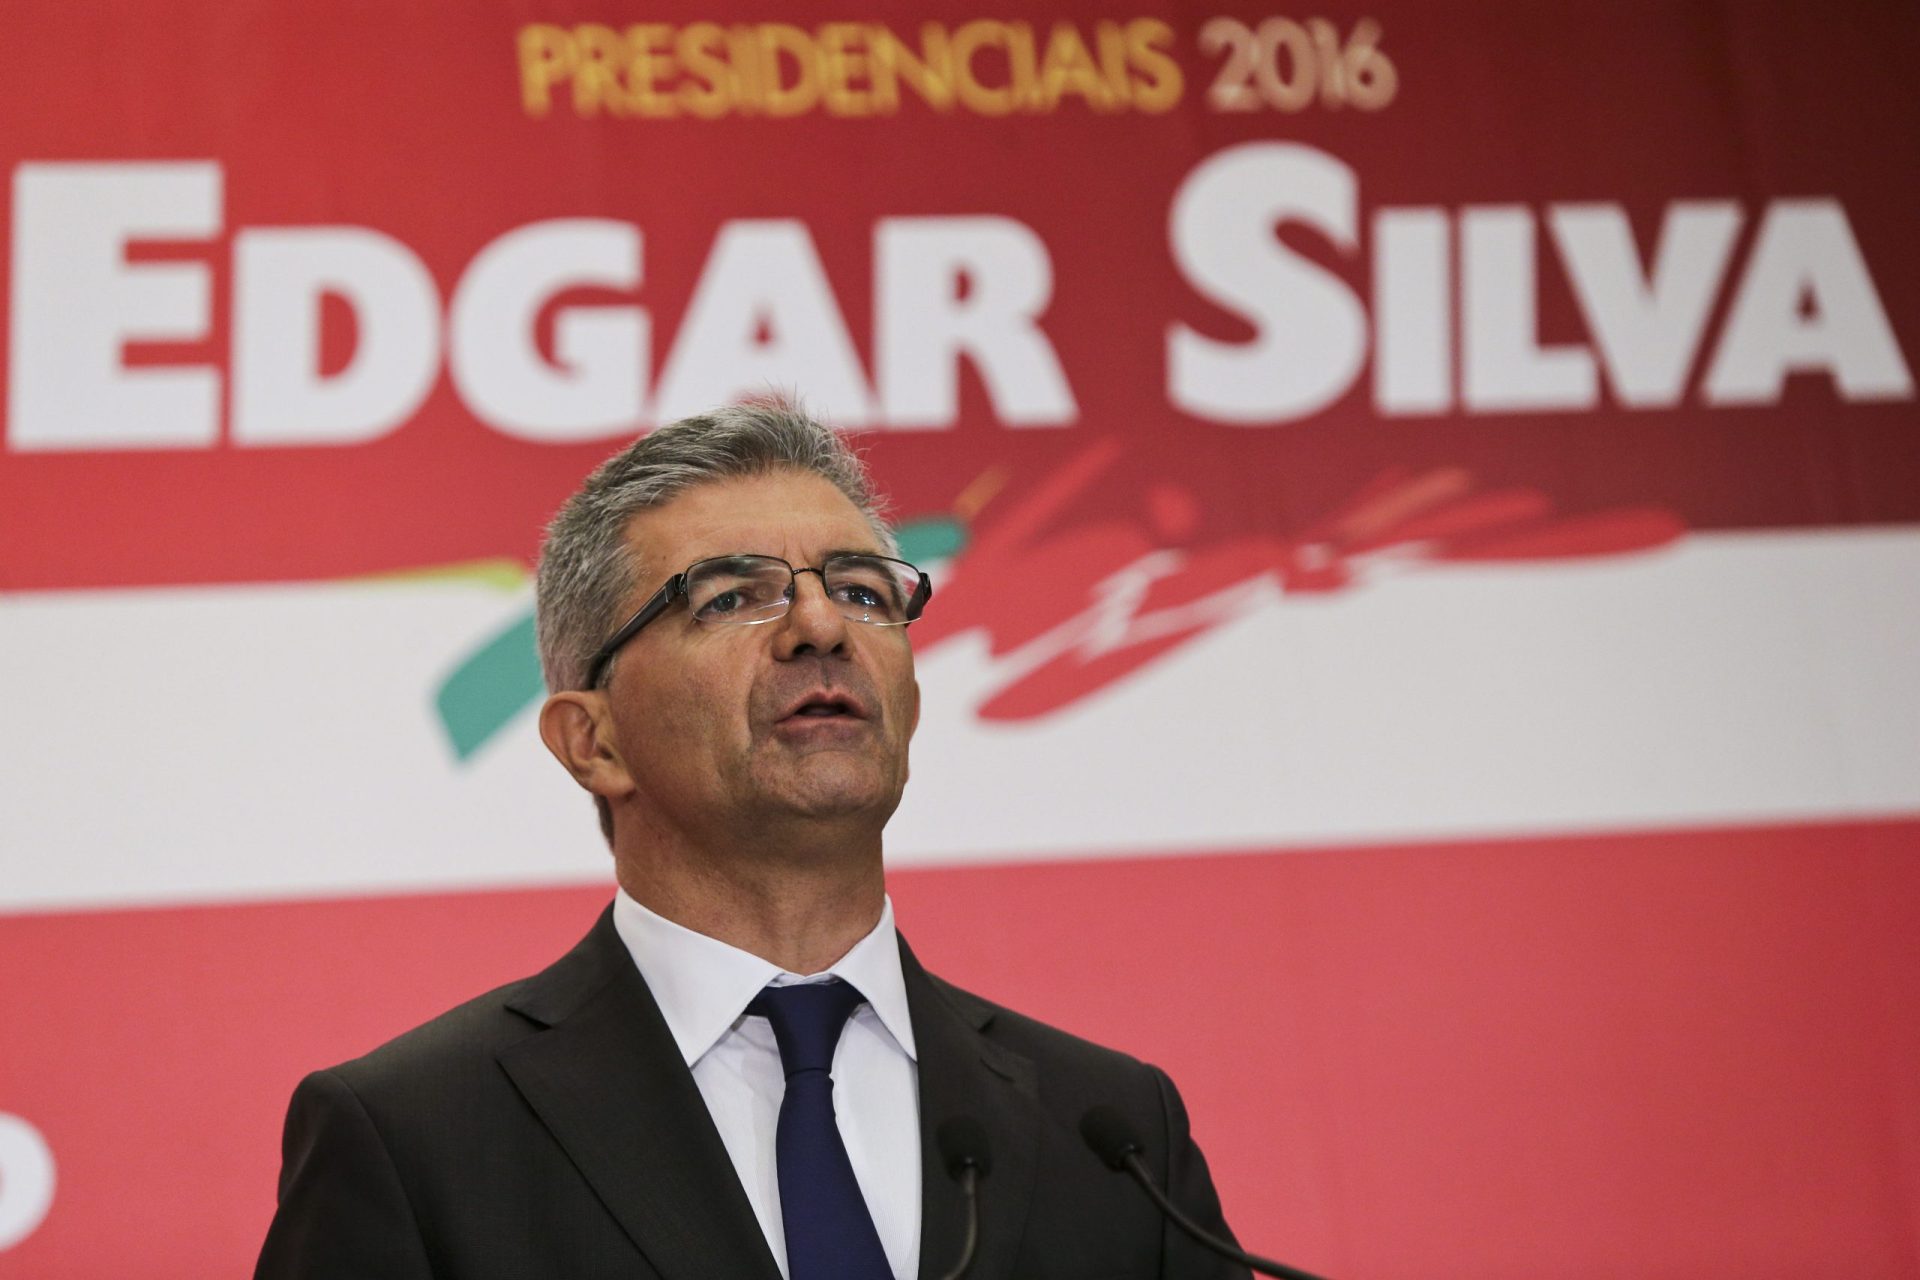 Edgar Silva diz estar ‘profundamente confiante’